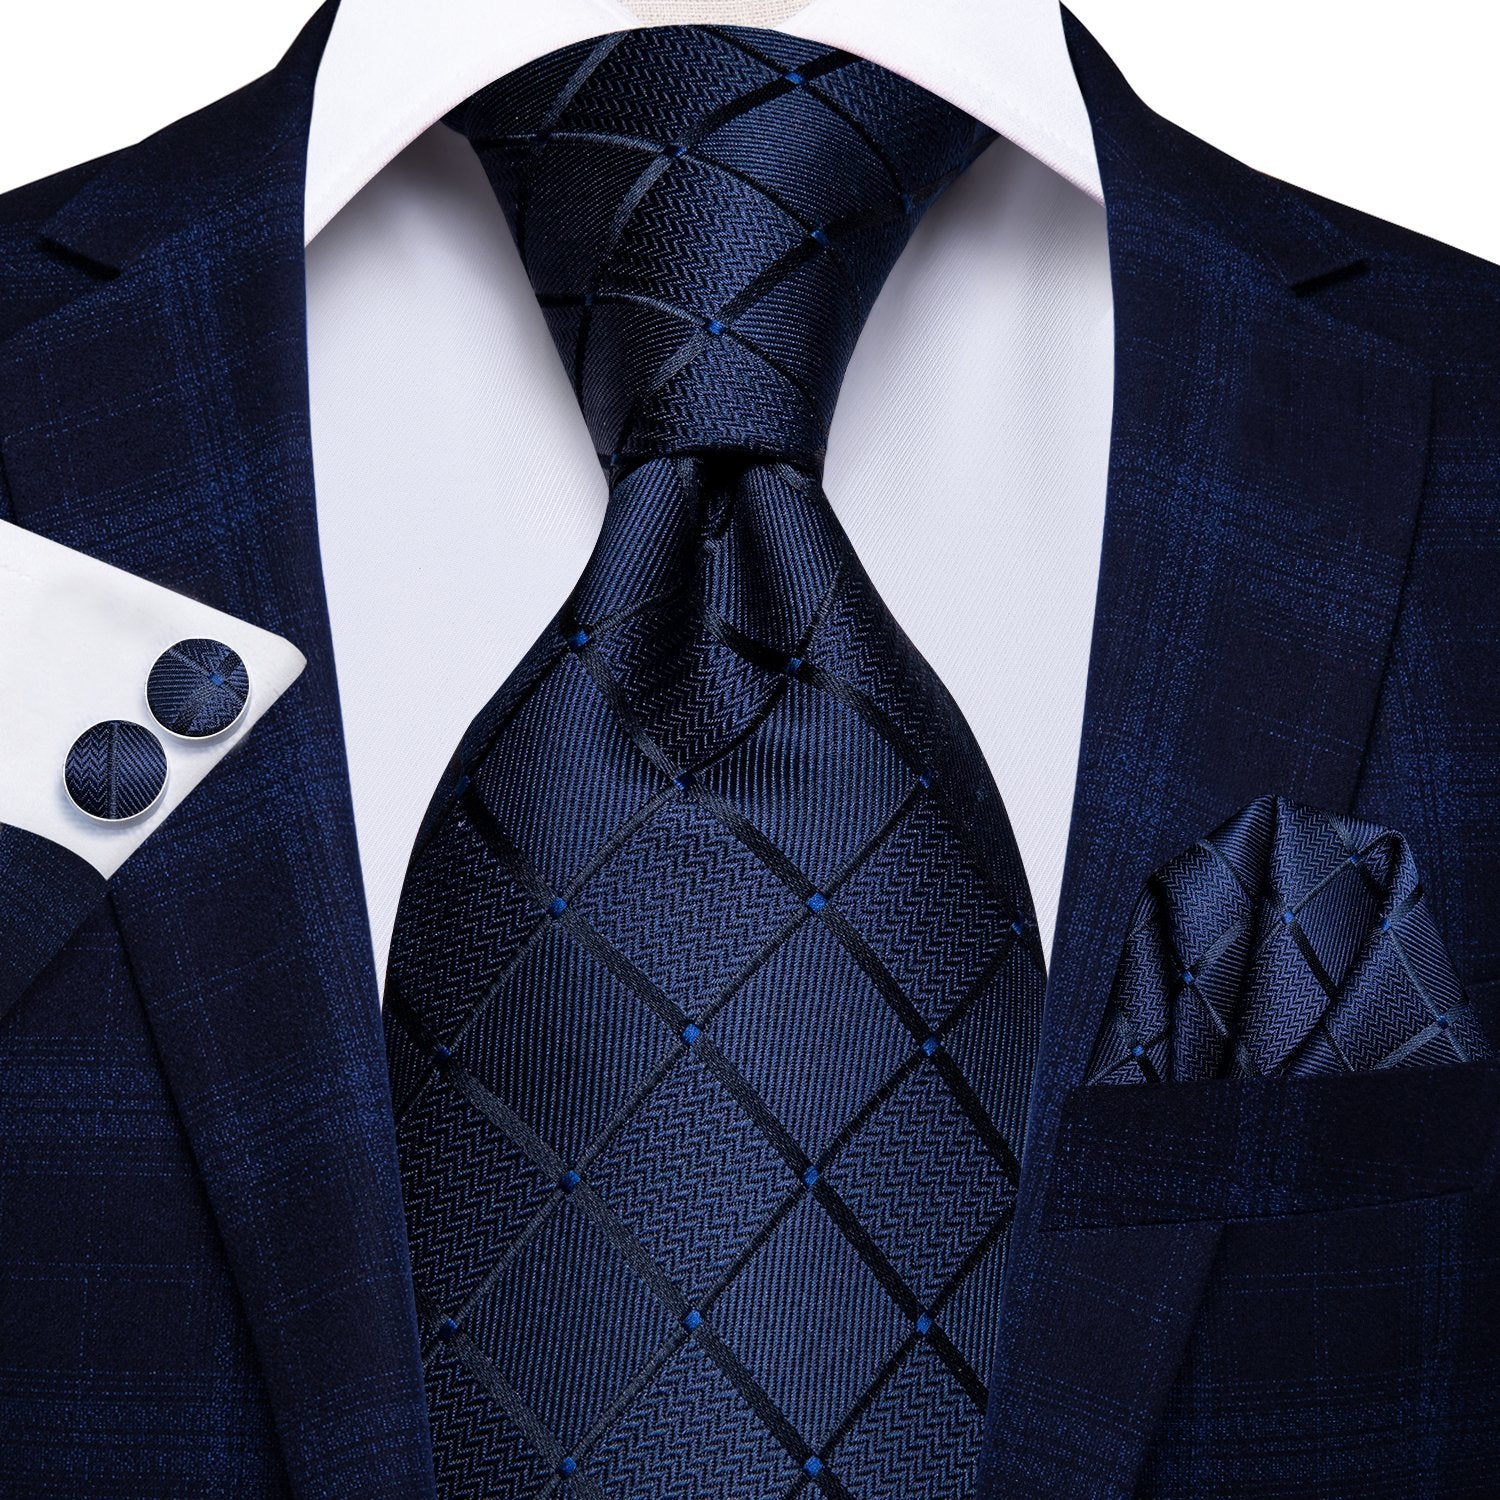 Blue Plaid Tie Handkerchief Cufflinks Set with Wedding Brooch